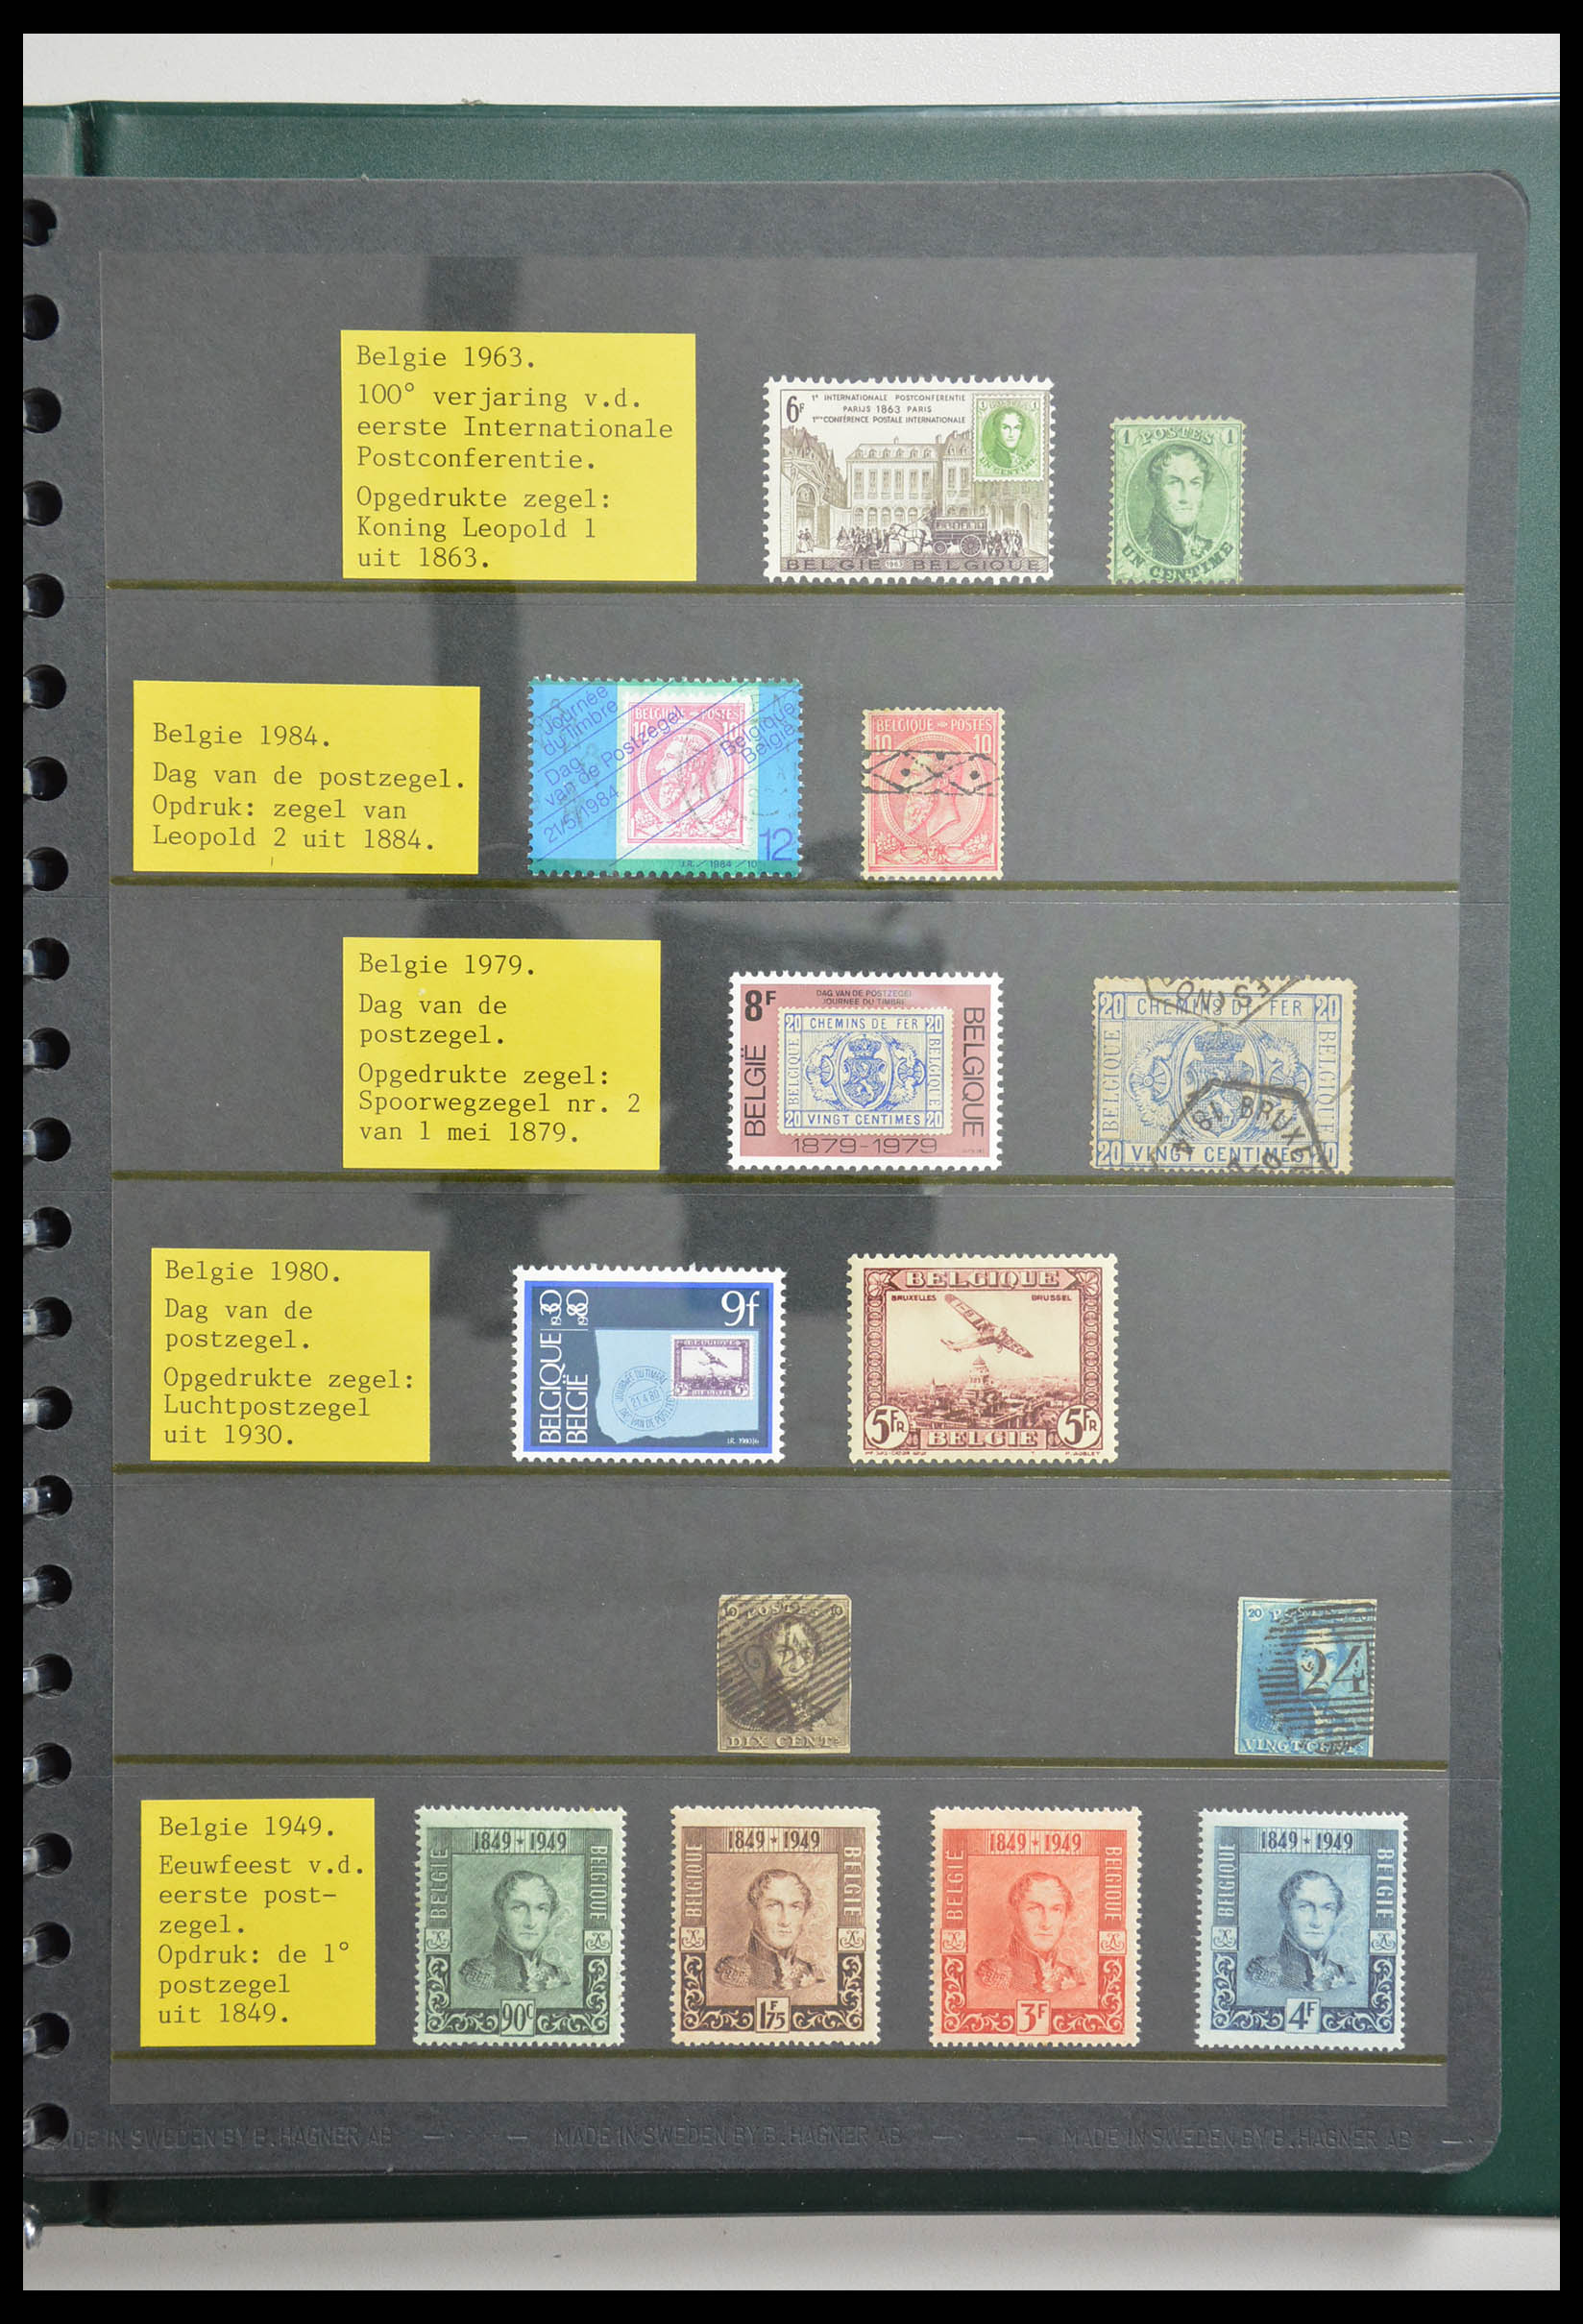 28337 109 - 28337 Postzegel op postzegel 1840-2001.